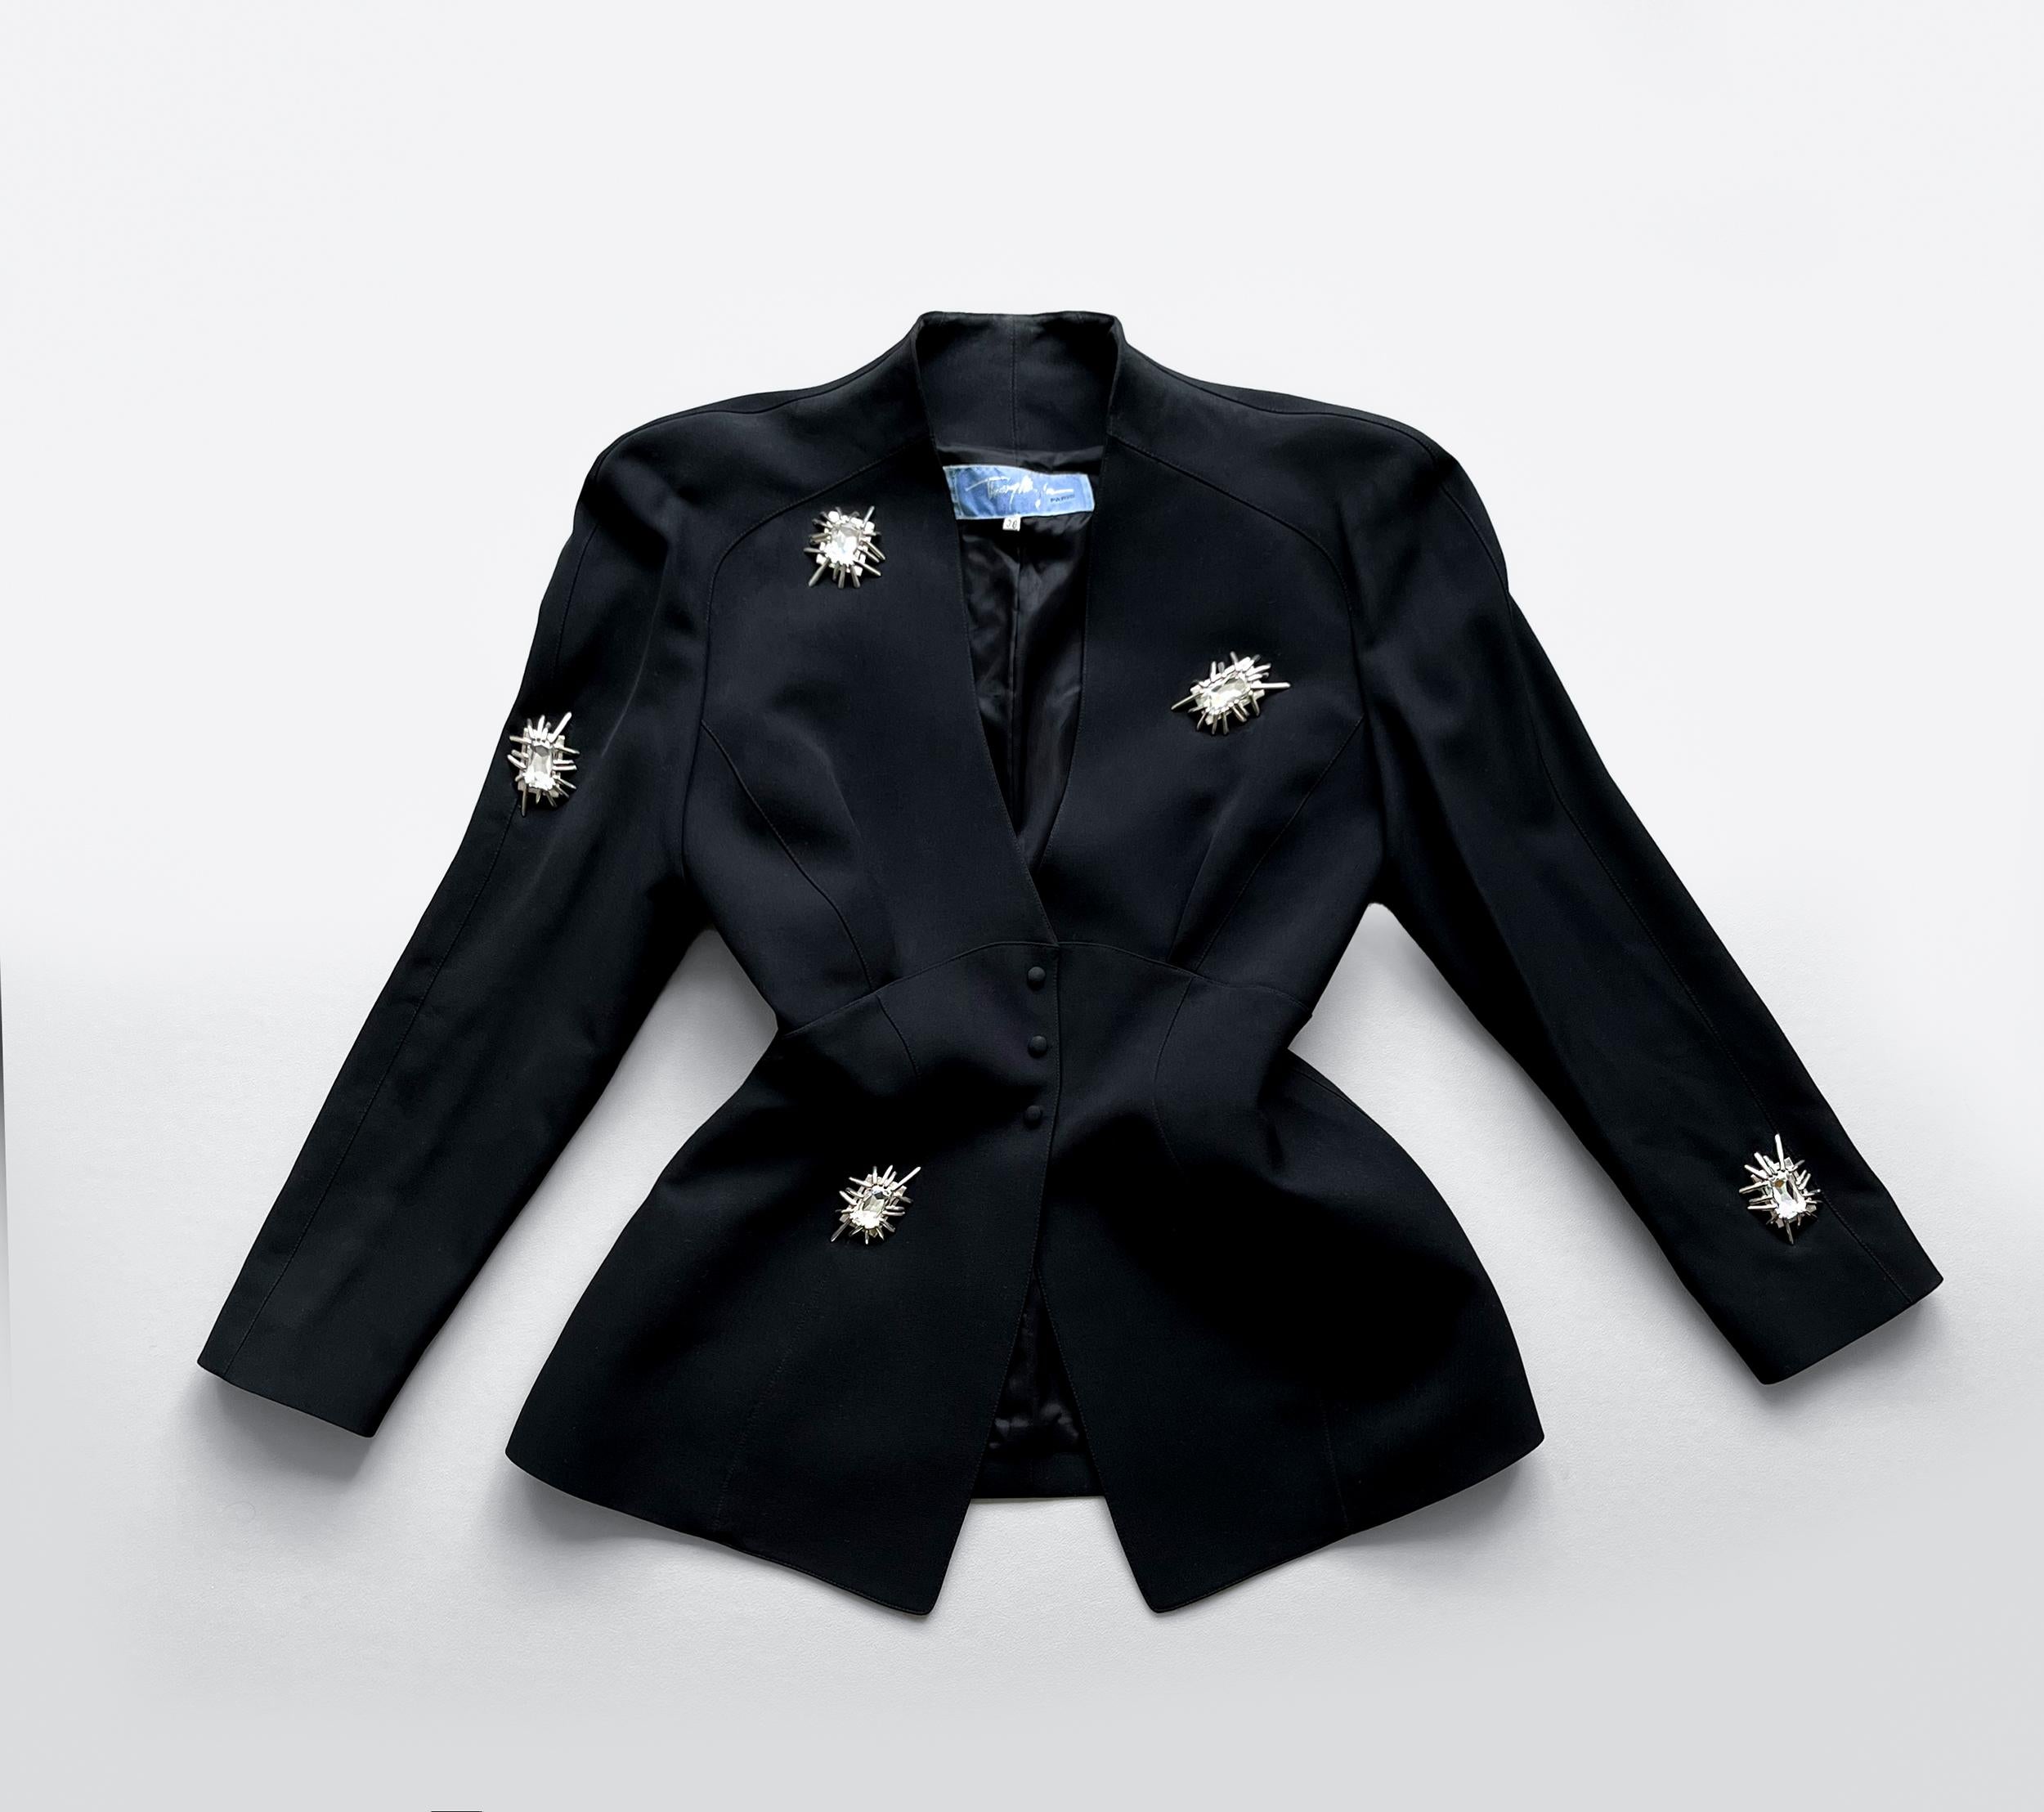 Gorgeous Thierry Mugler Jacket Diamond Jewel Rare Dramatic Black Jacket For Sale 2